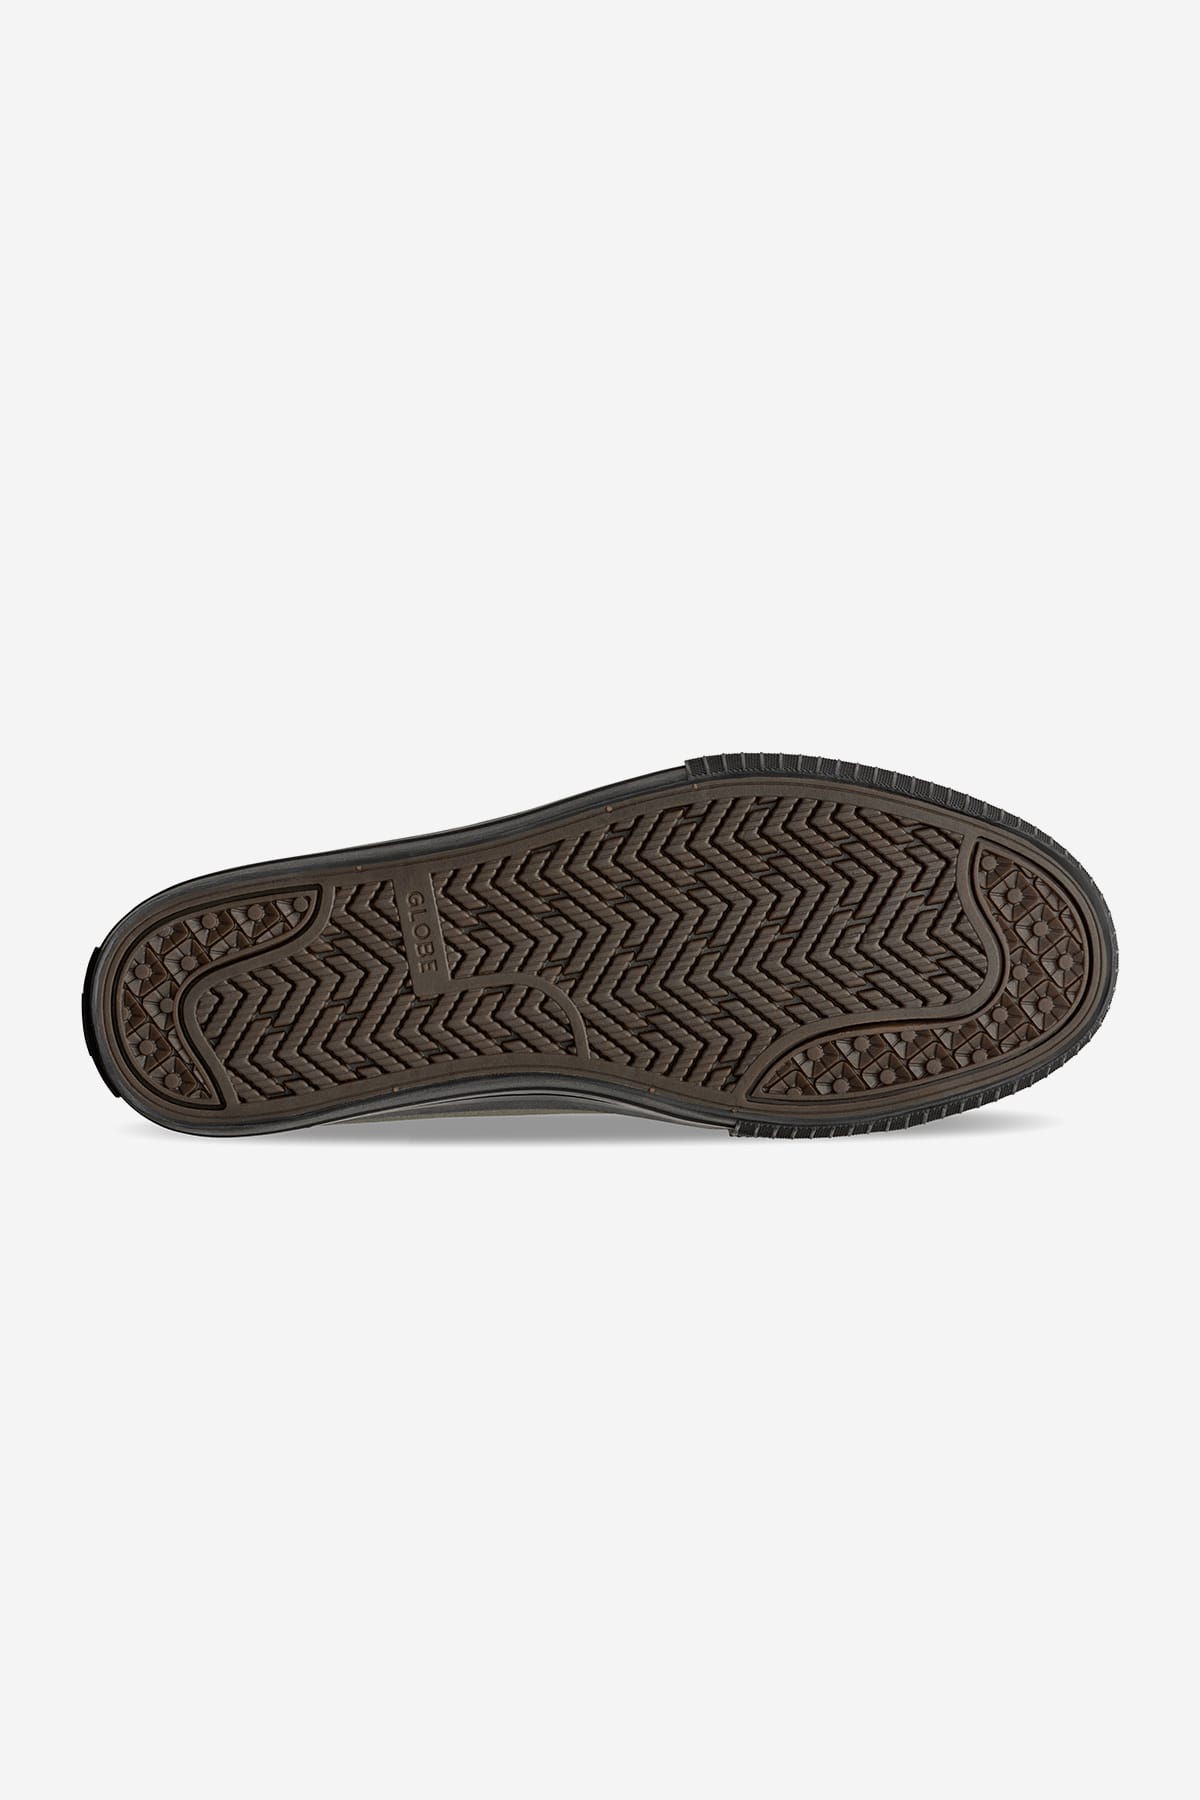 Globe - Gillette - Dunkel Olive/Schwarz - skateboard Schuhe